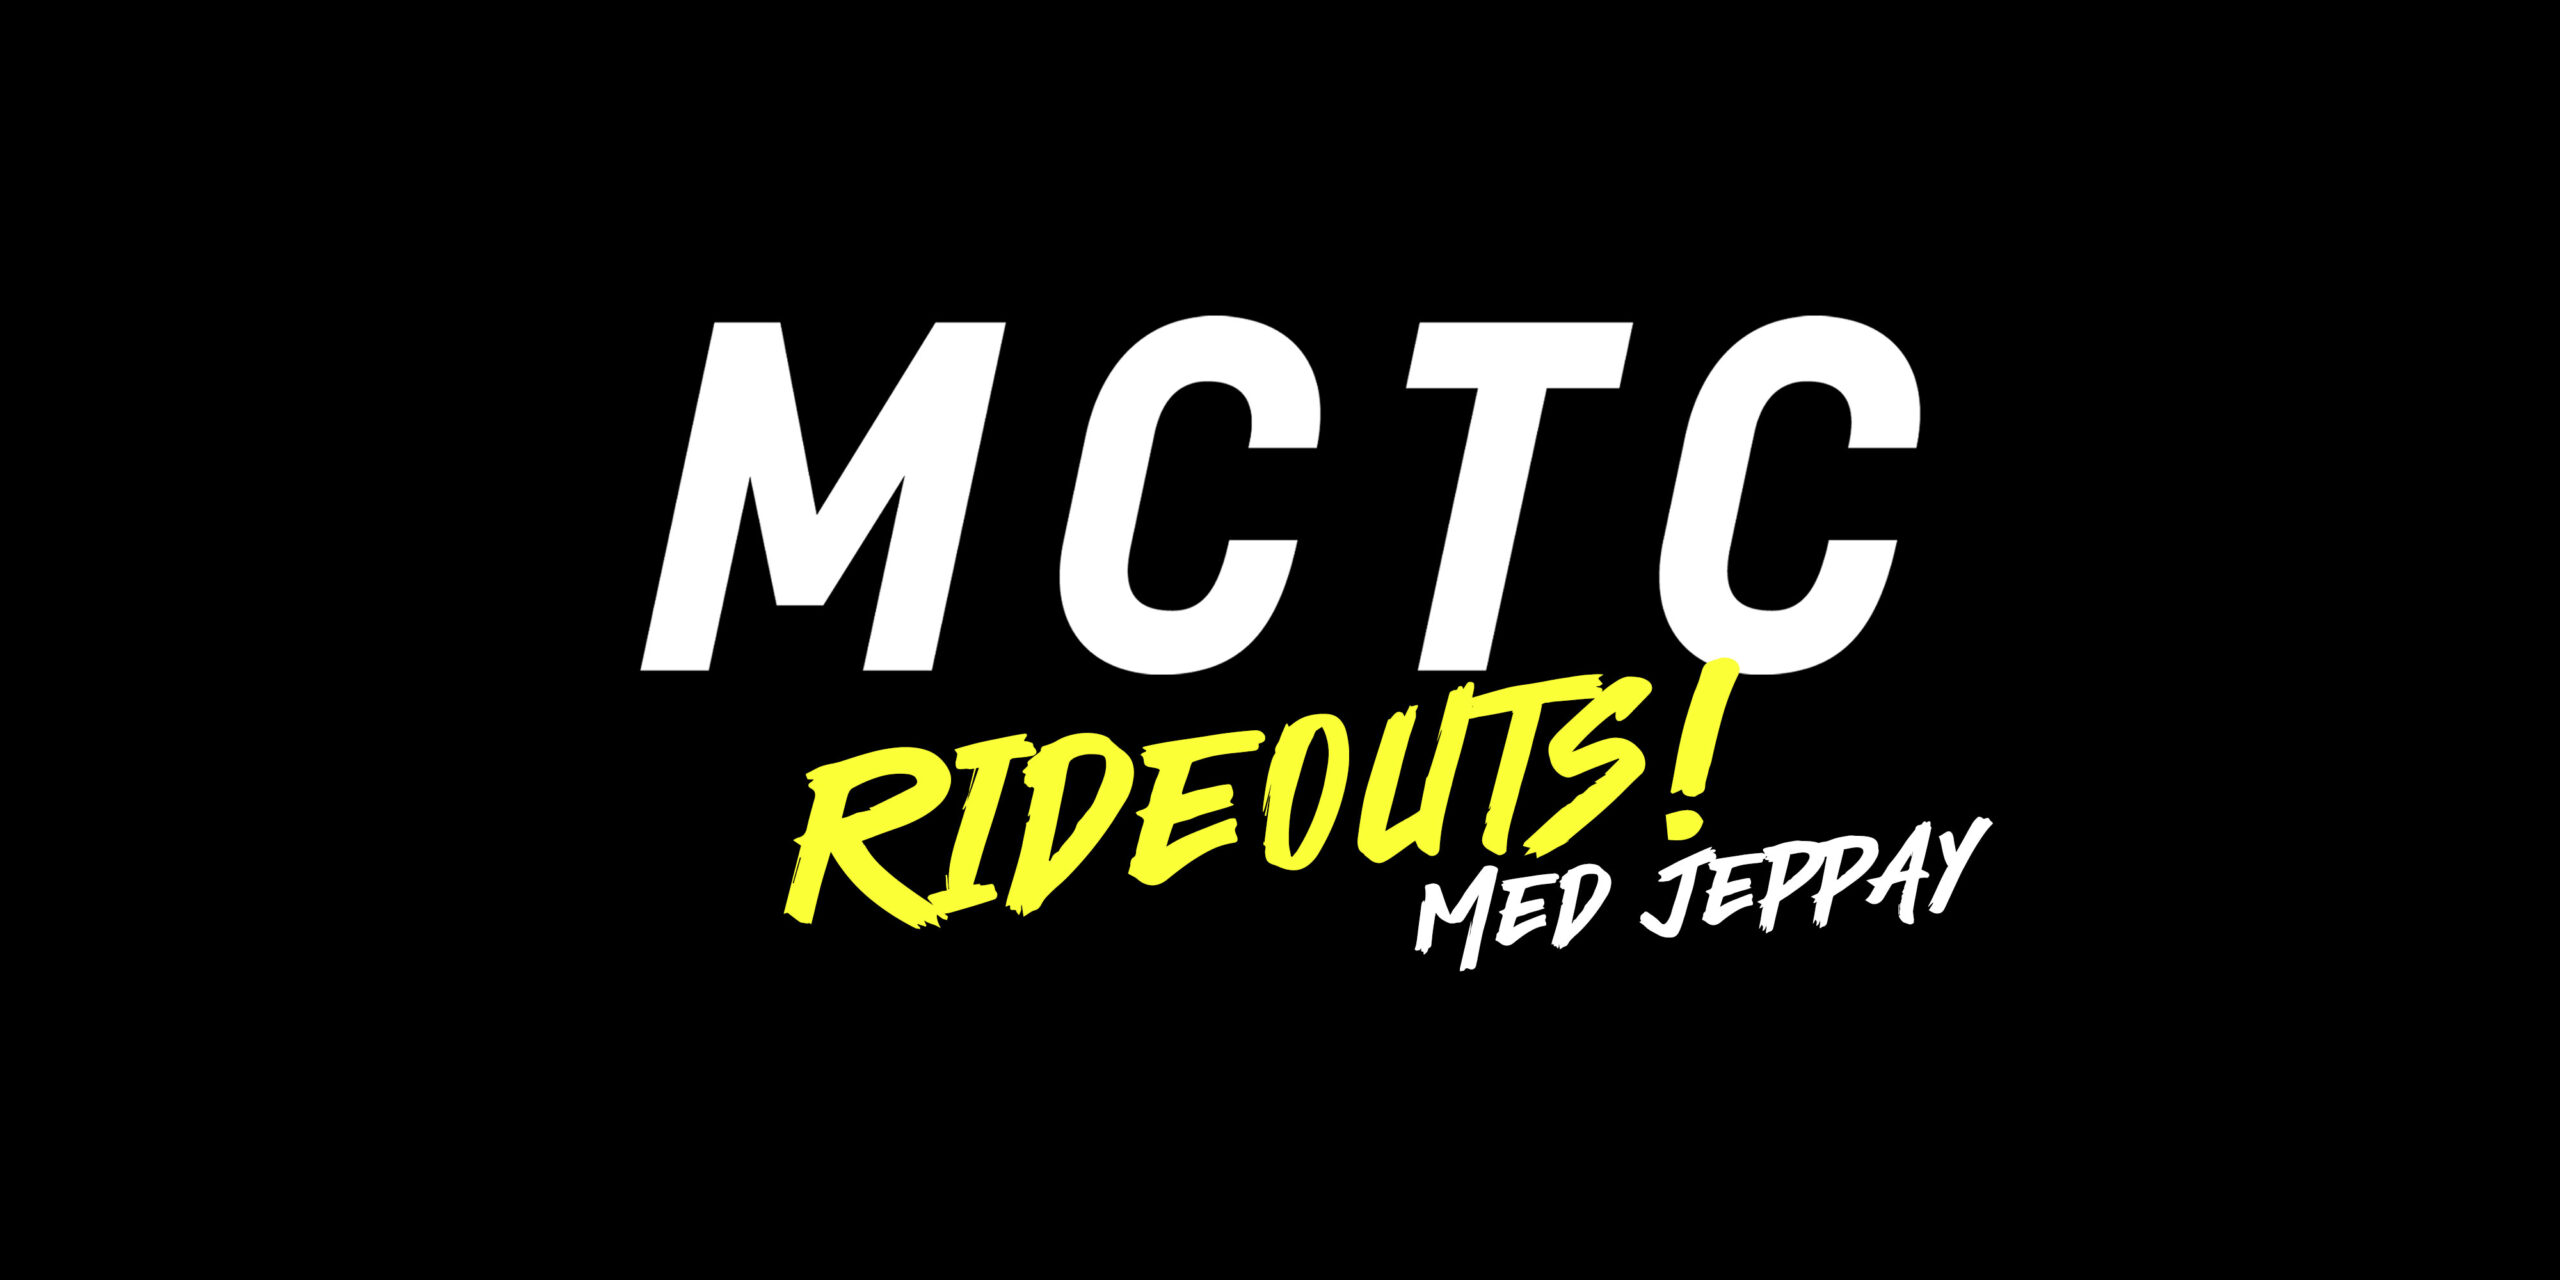 rideouts logo med jeppay